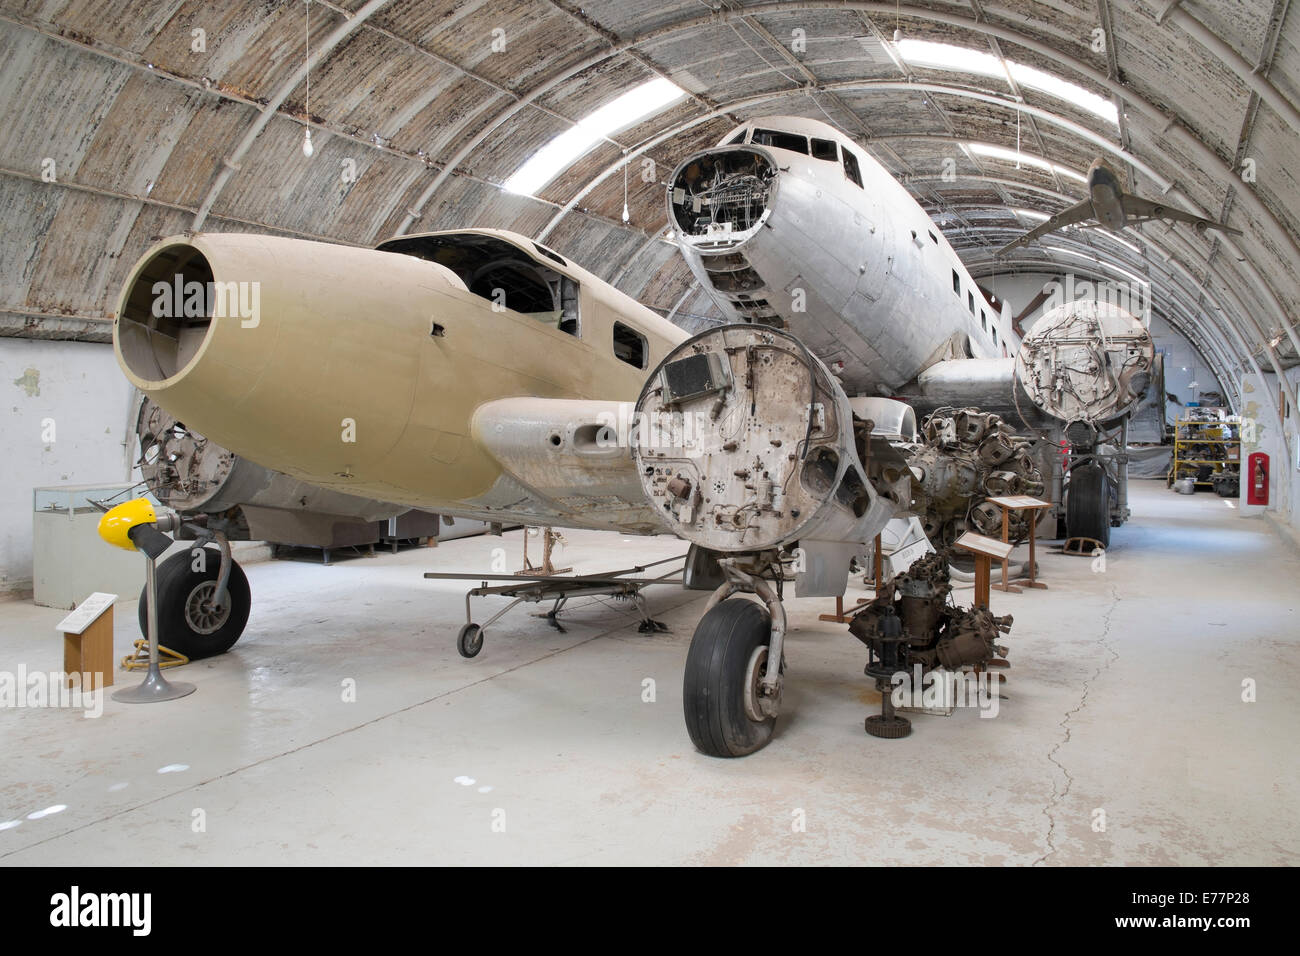 Images taken at Malta's aviation museum near Rabat Stock Photo